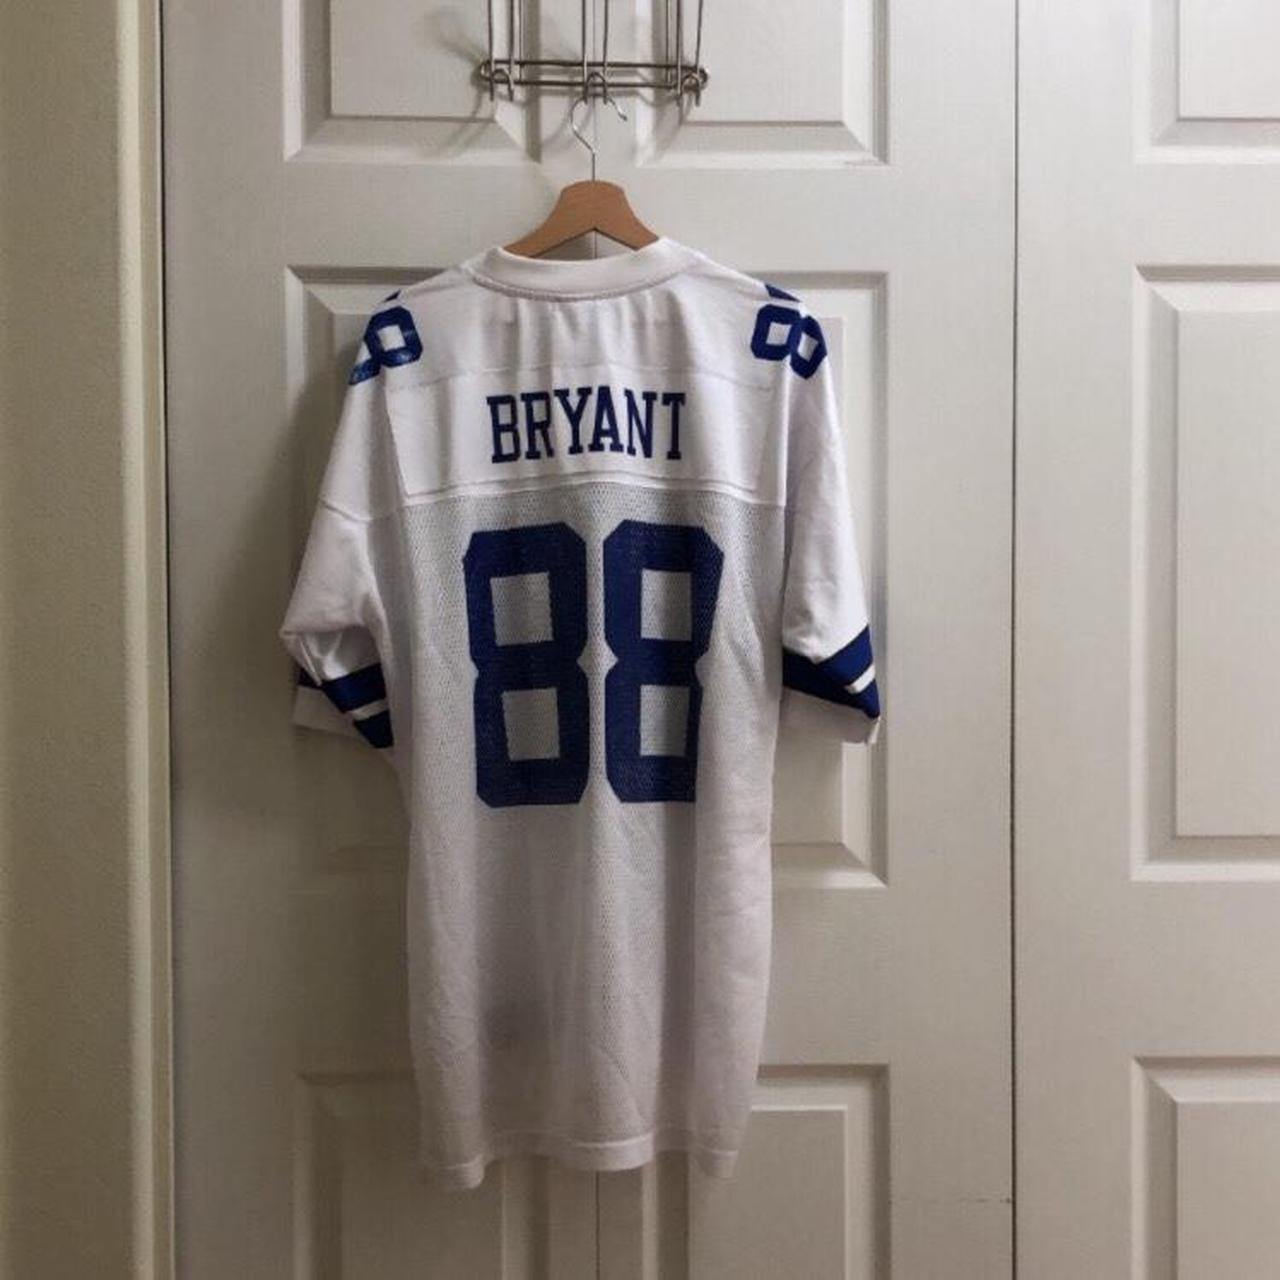 Dallas Cowboys Dez Bryant NFL jersey. XL. Blue and White